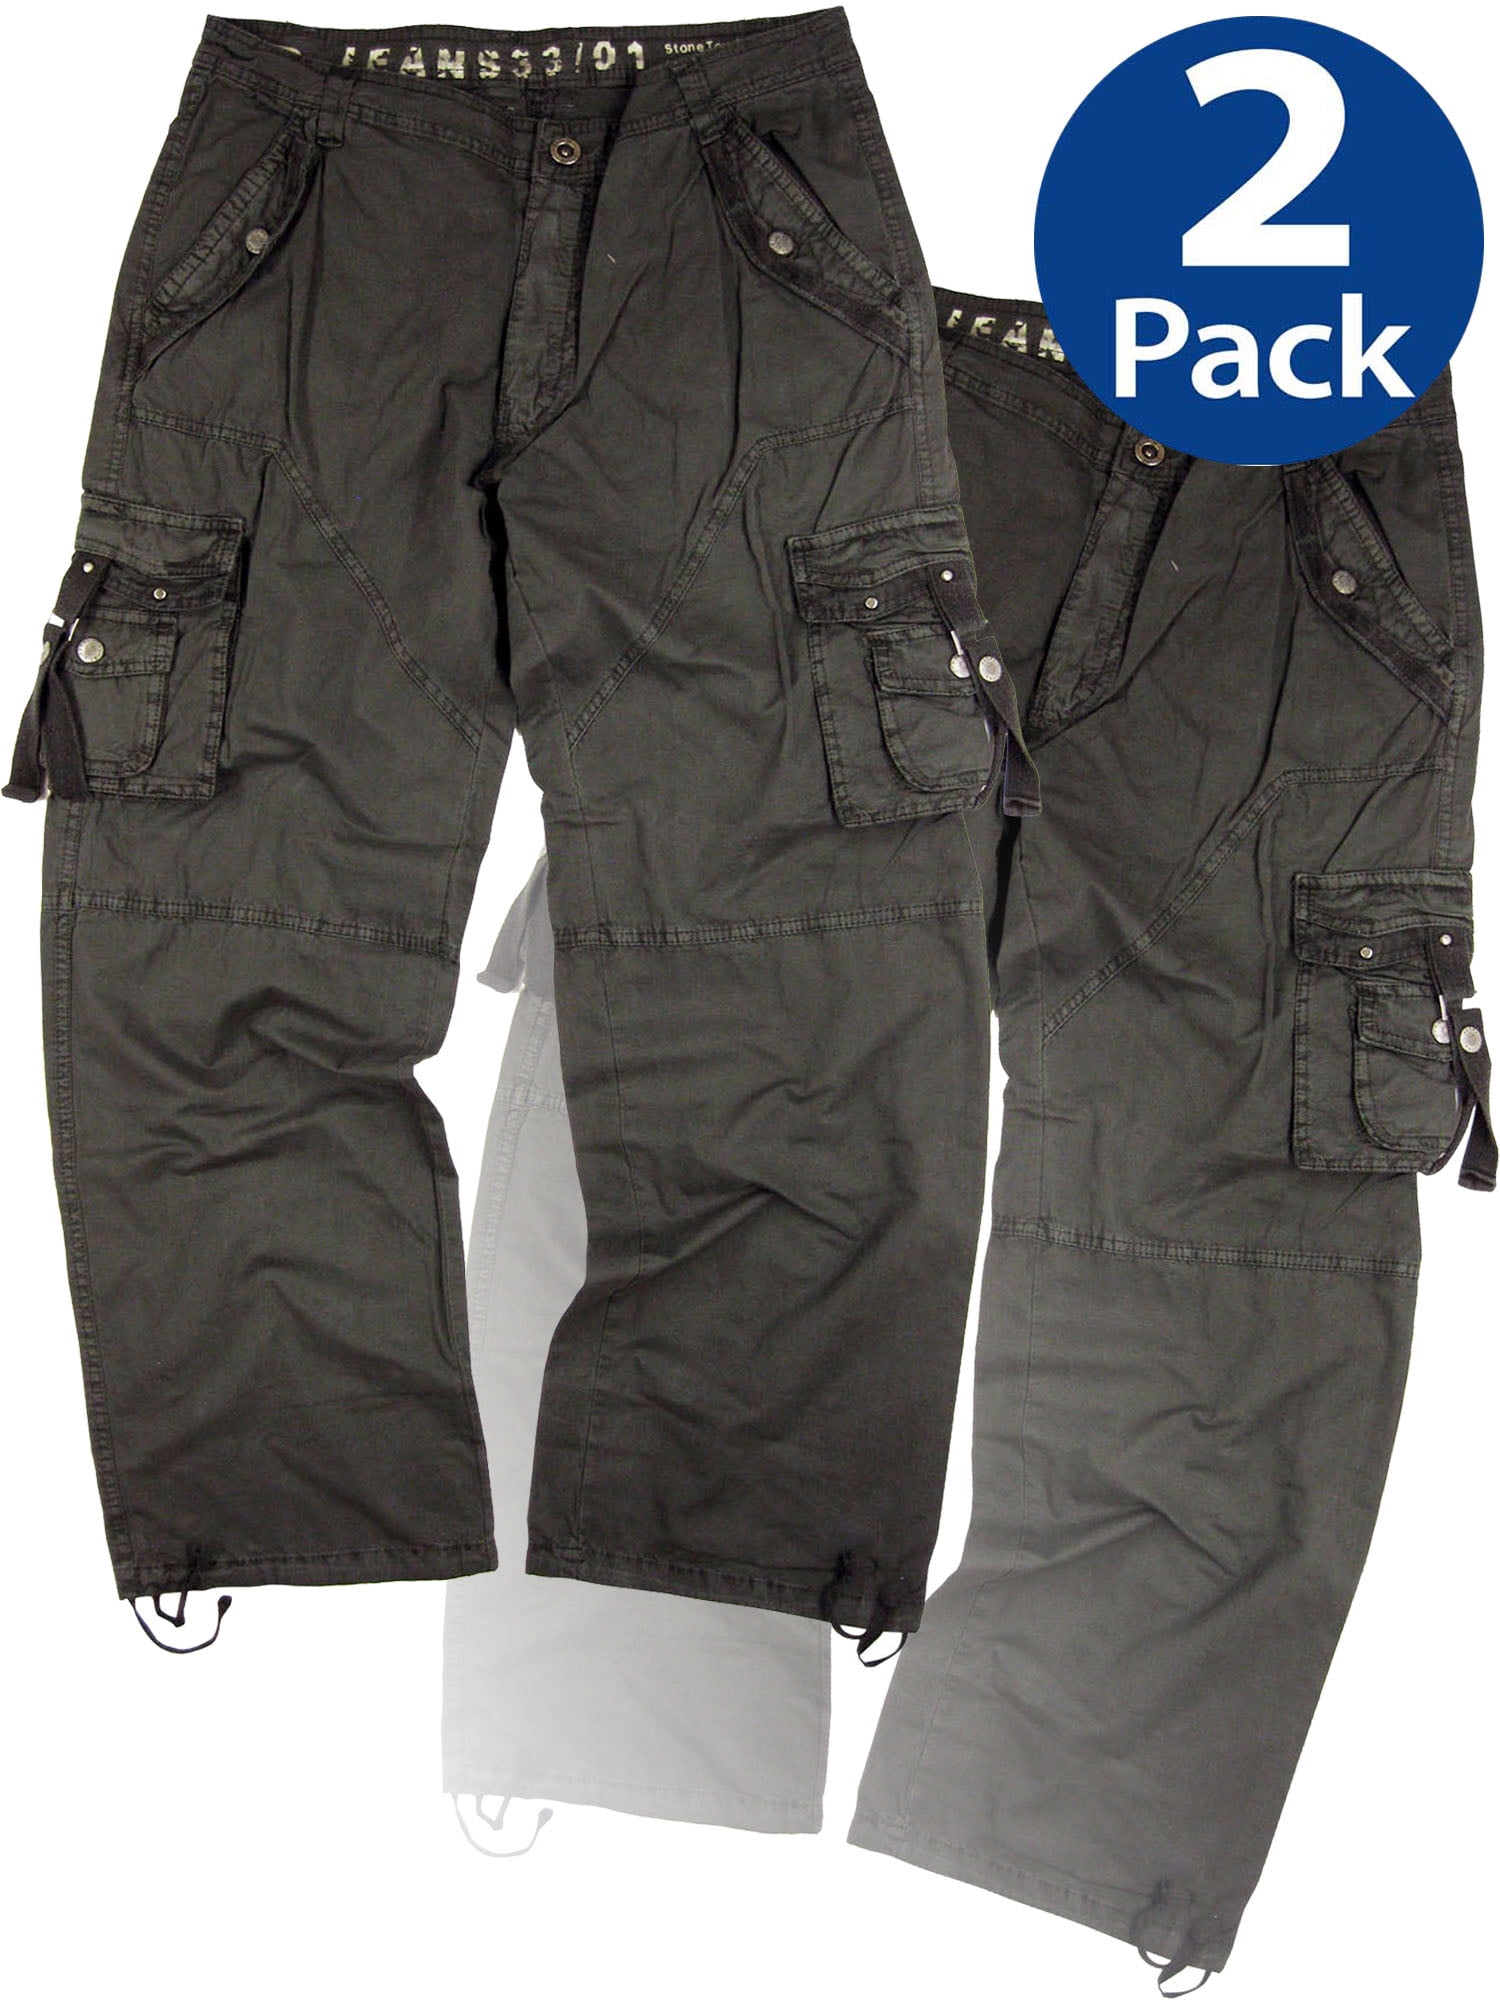 StoneTouch-Men's Military-Style Cargo Pants 2pcs pack #A8x2 Dk. Grey ...